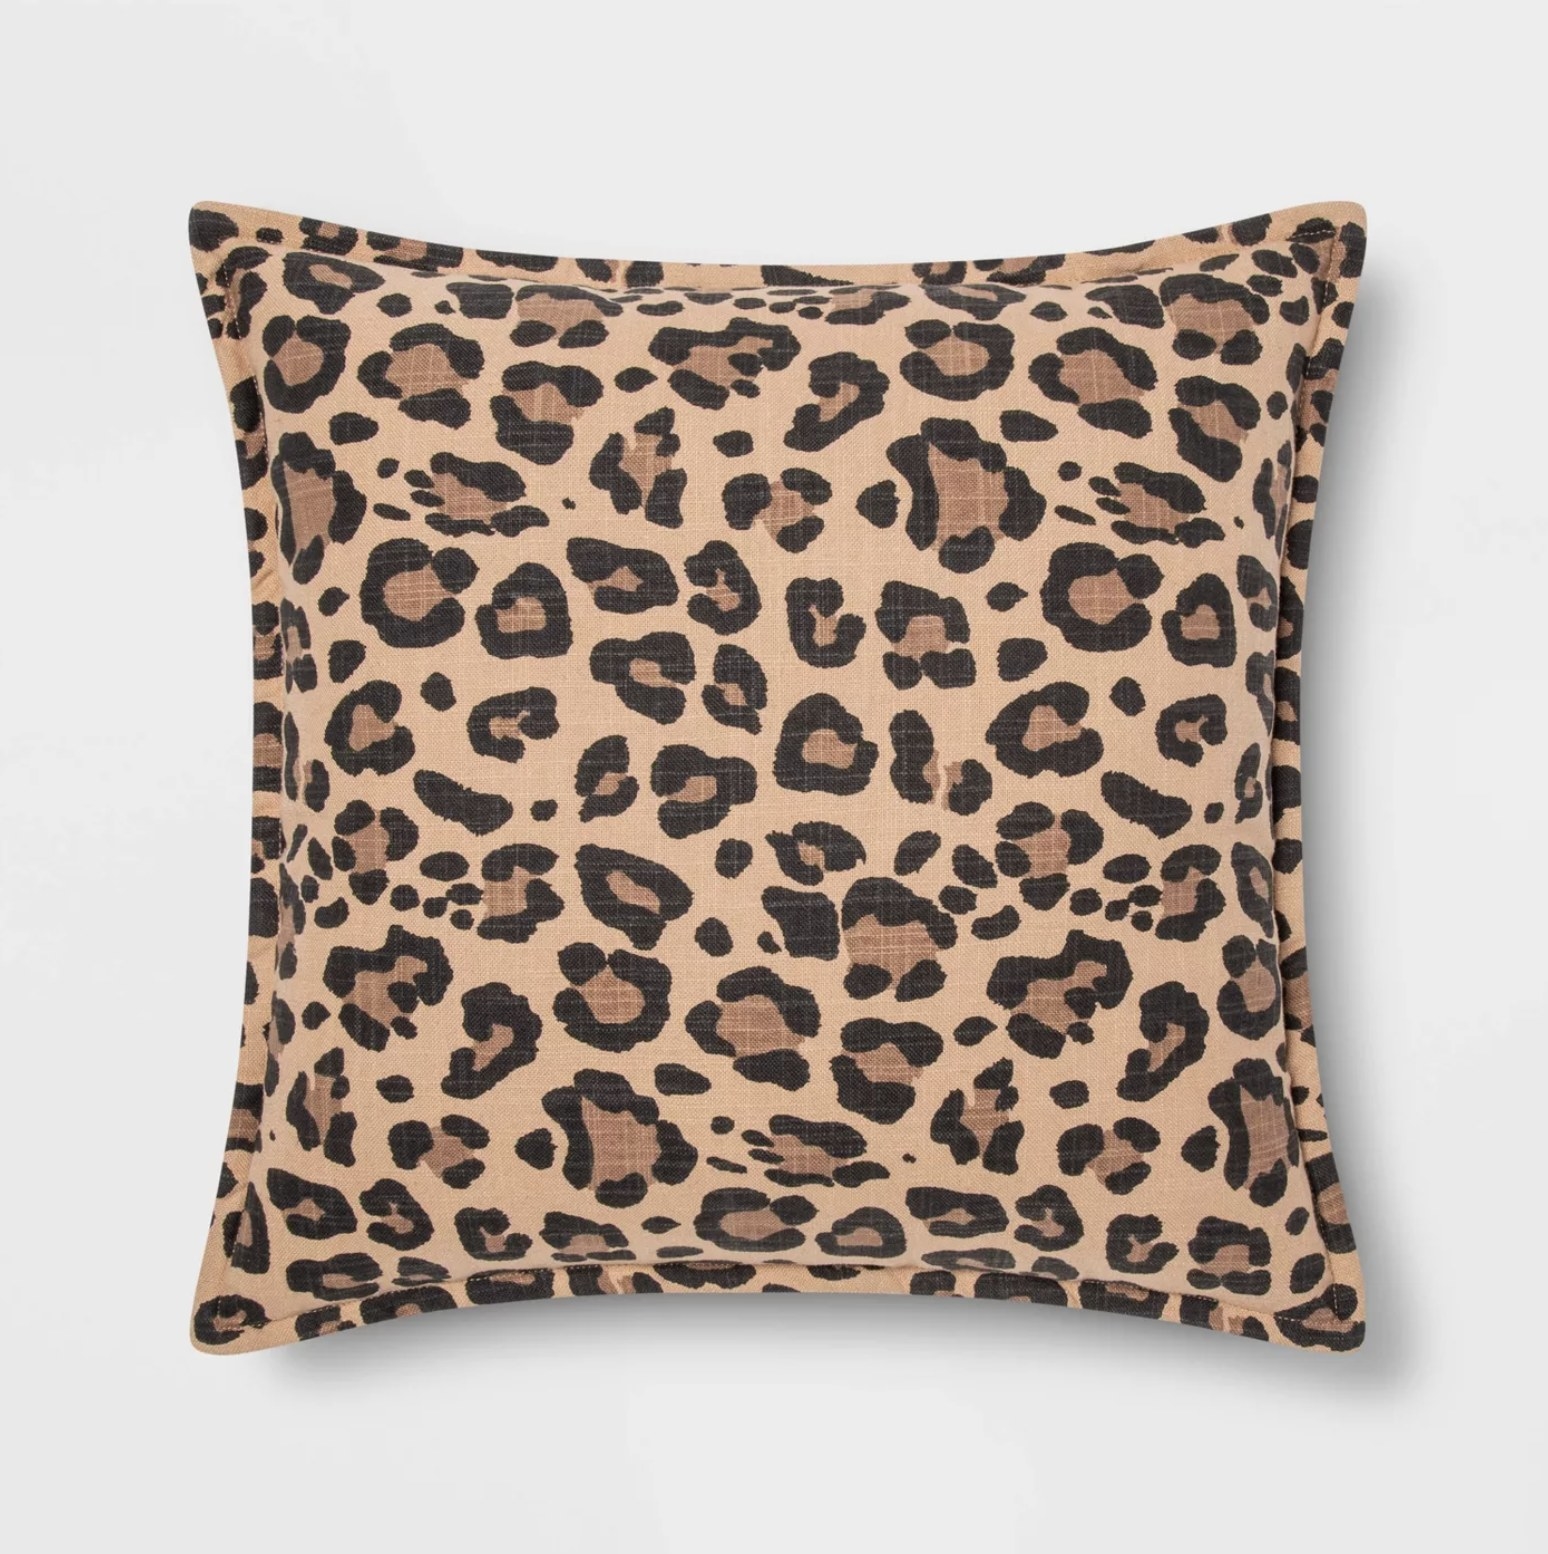 The leopard print pillow